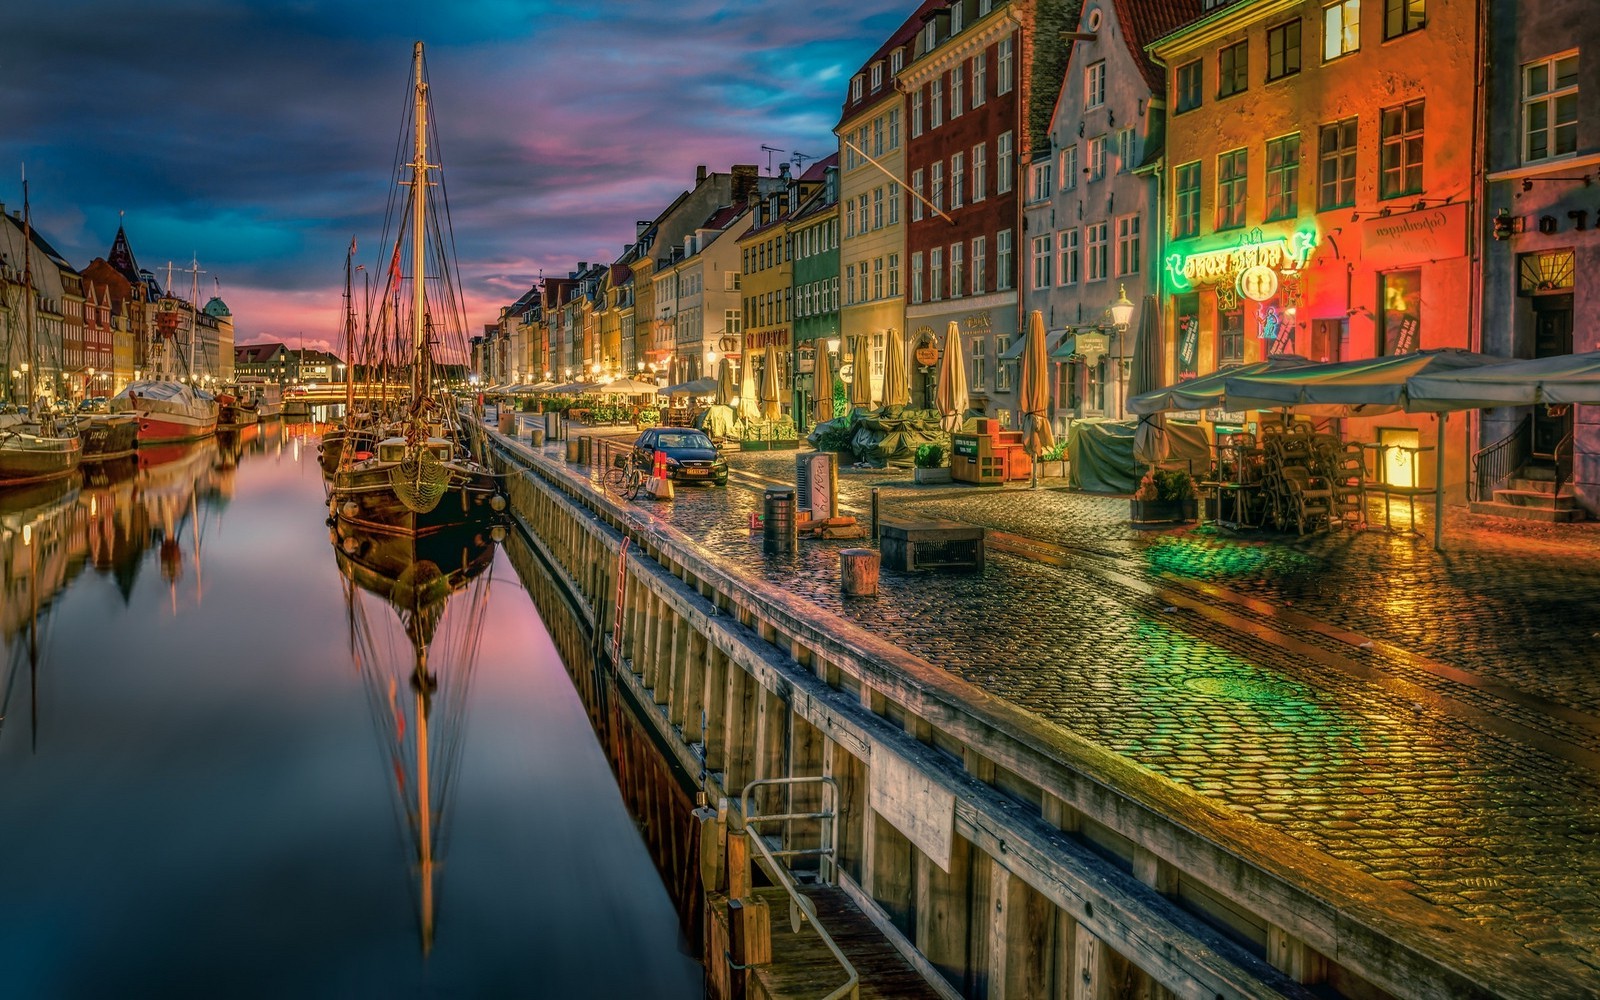 photography, Urban, Landscape, Architecture, City, Old Building, Canal, Water, Reflection, Boat, Lights, Cobblestone, Copenhagen, Denmark Wallpaper